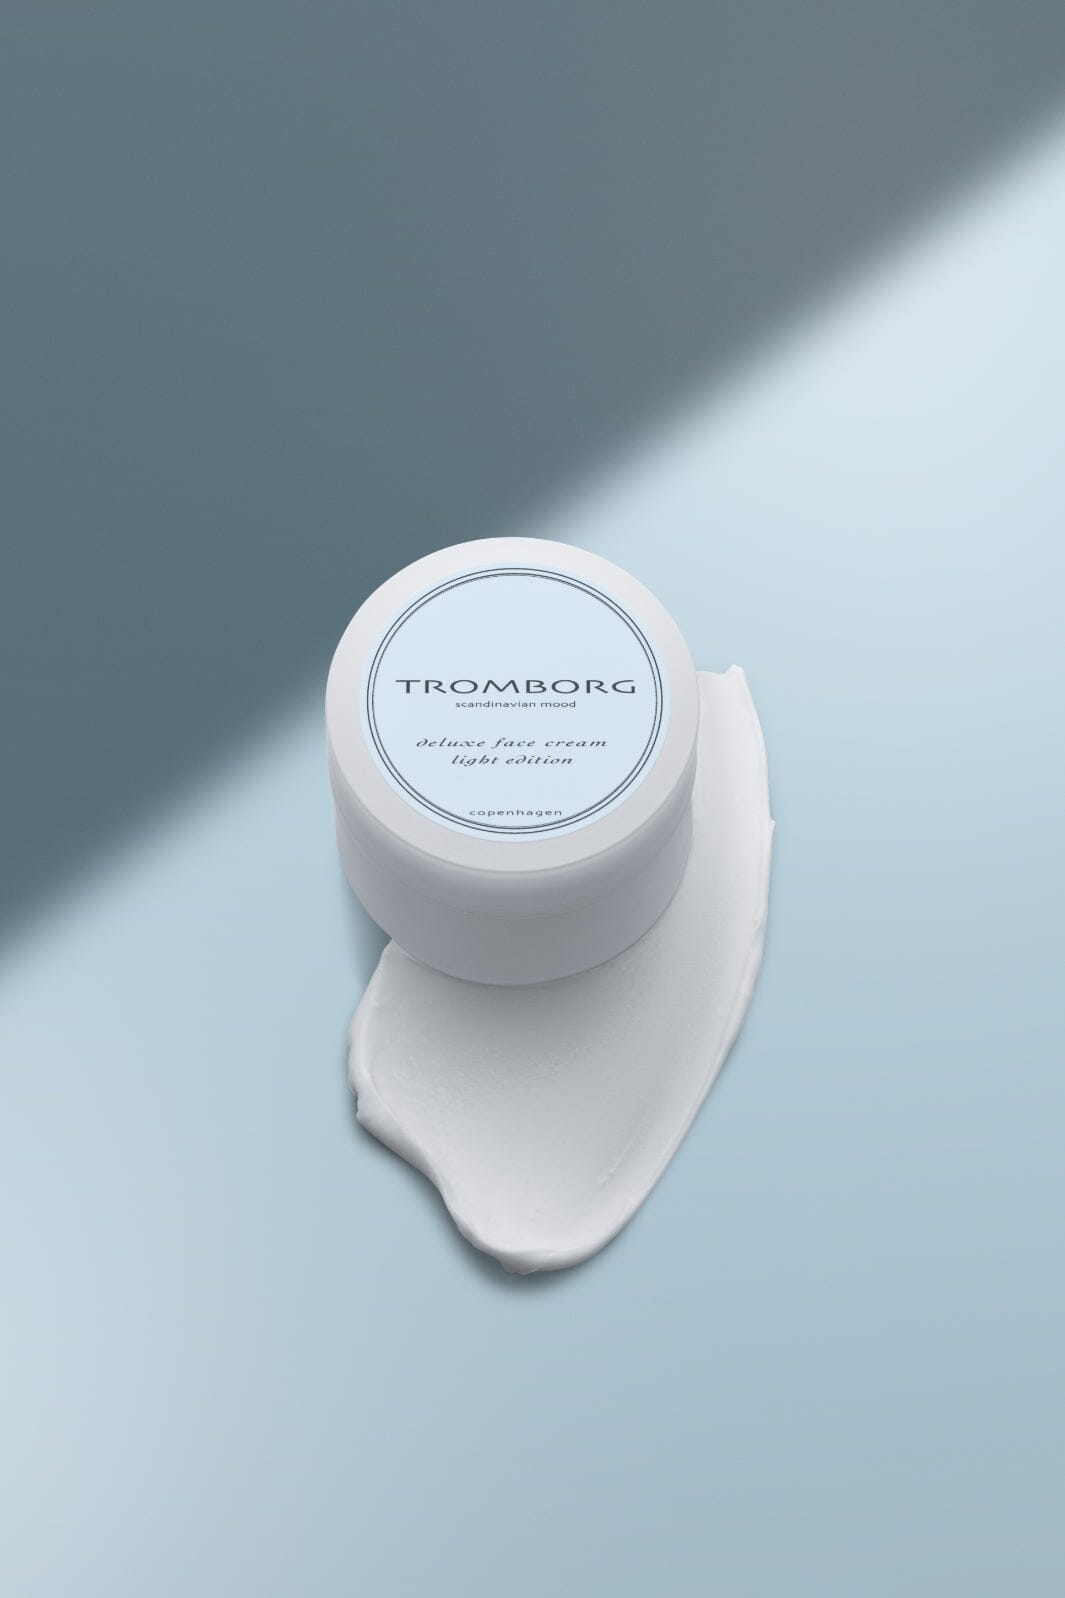 Tromborg - Deluxe Face Cream Light Edition Ansigtscreme 